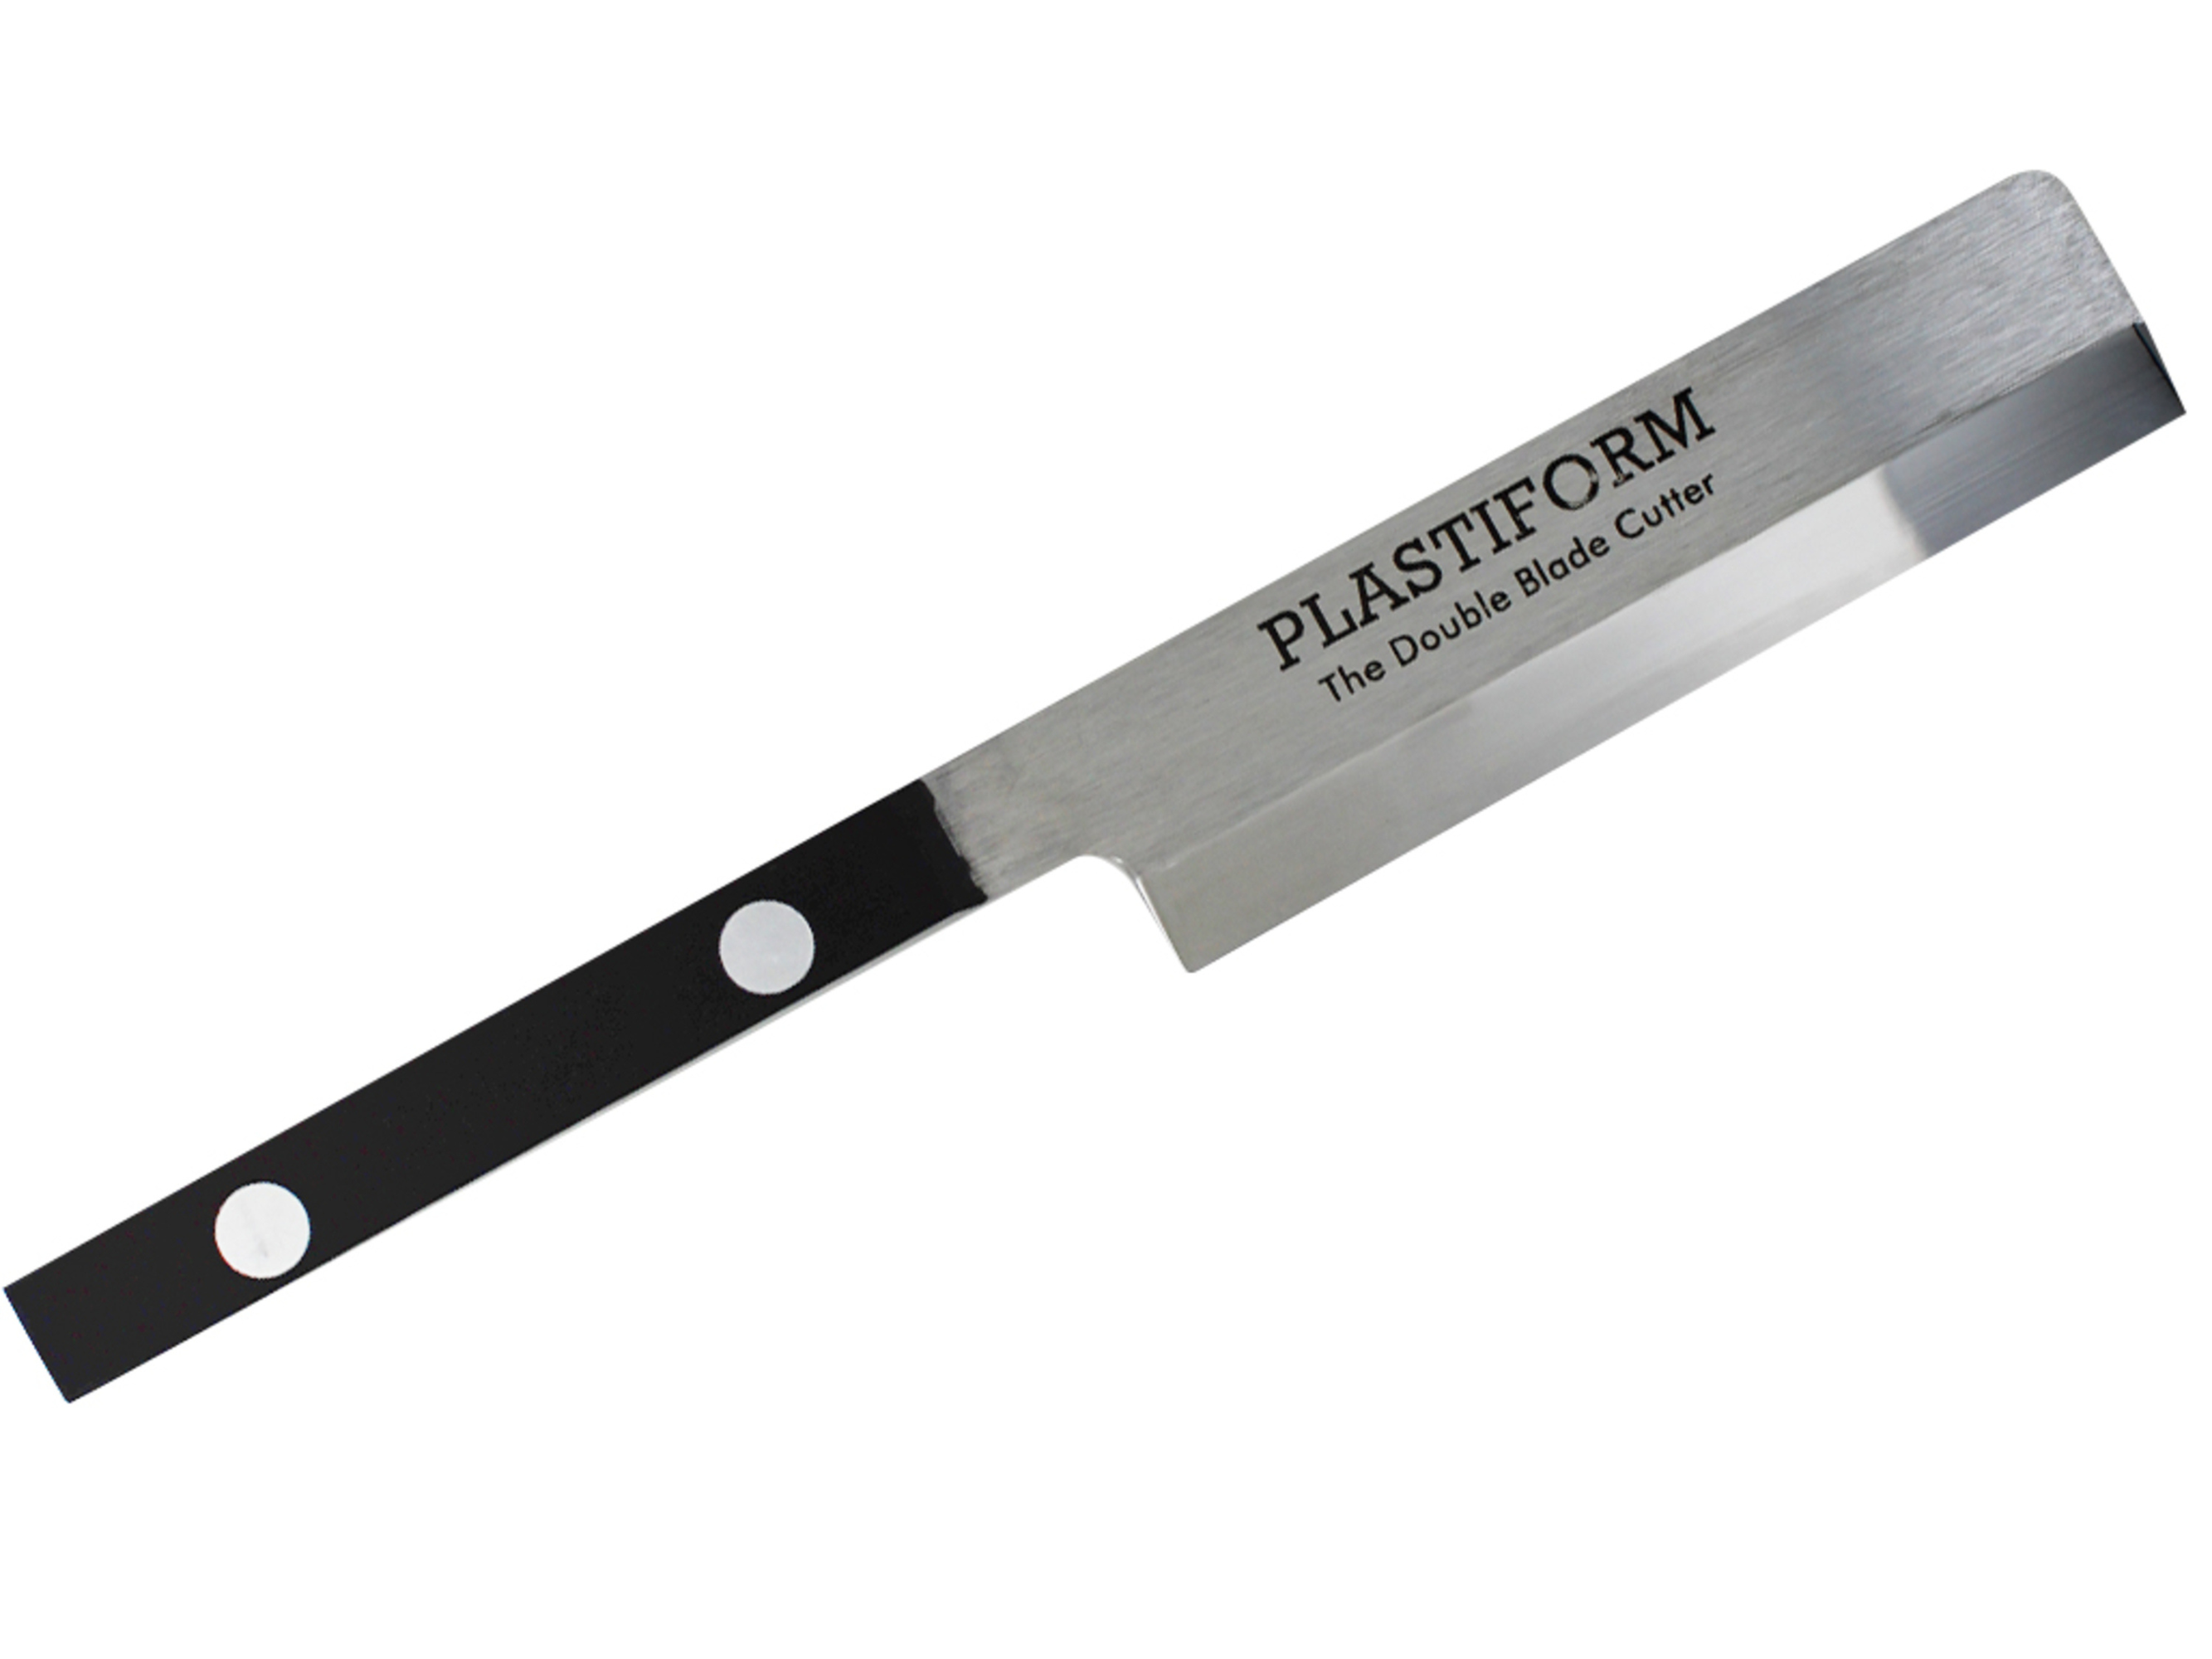 Plastiform Double Blade Cutter 06869111